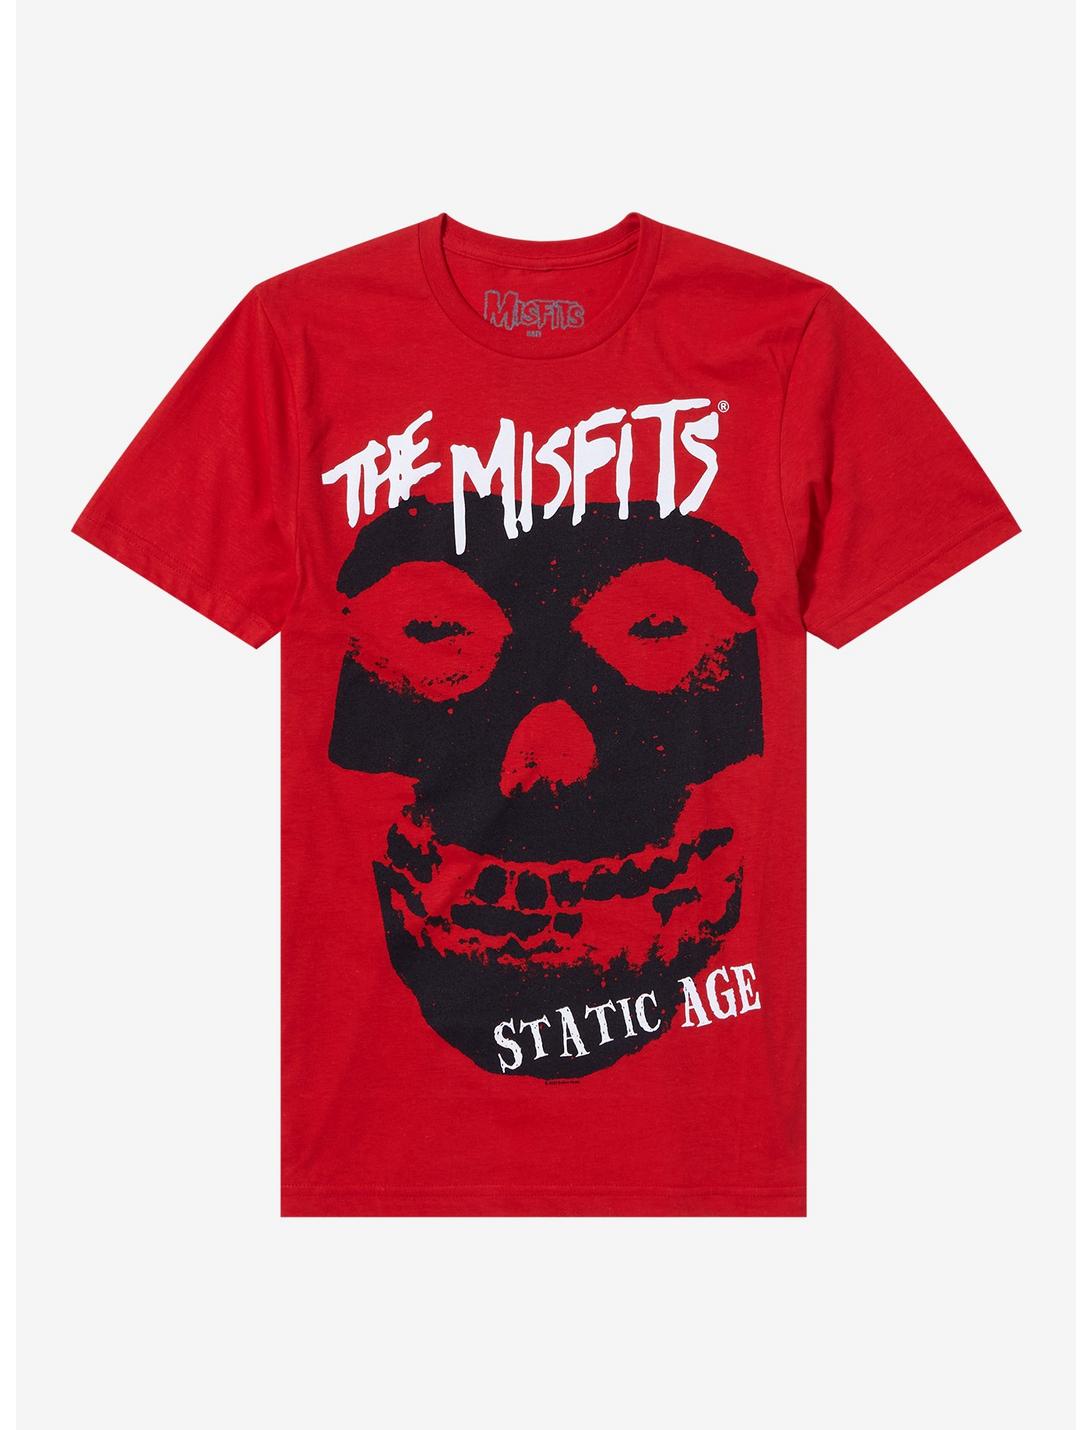 Misfits Static Age Boyfriend Fit Girls T-Shirt, RED, hi-res